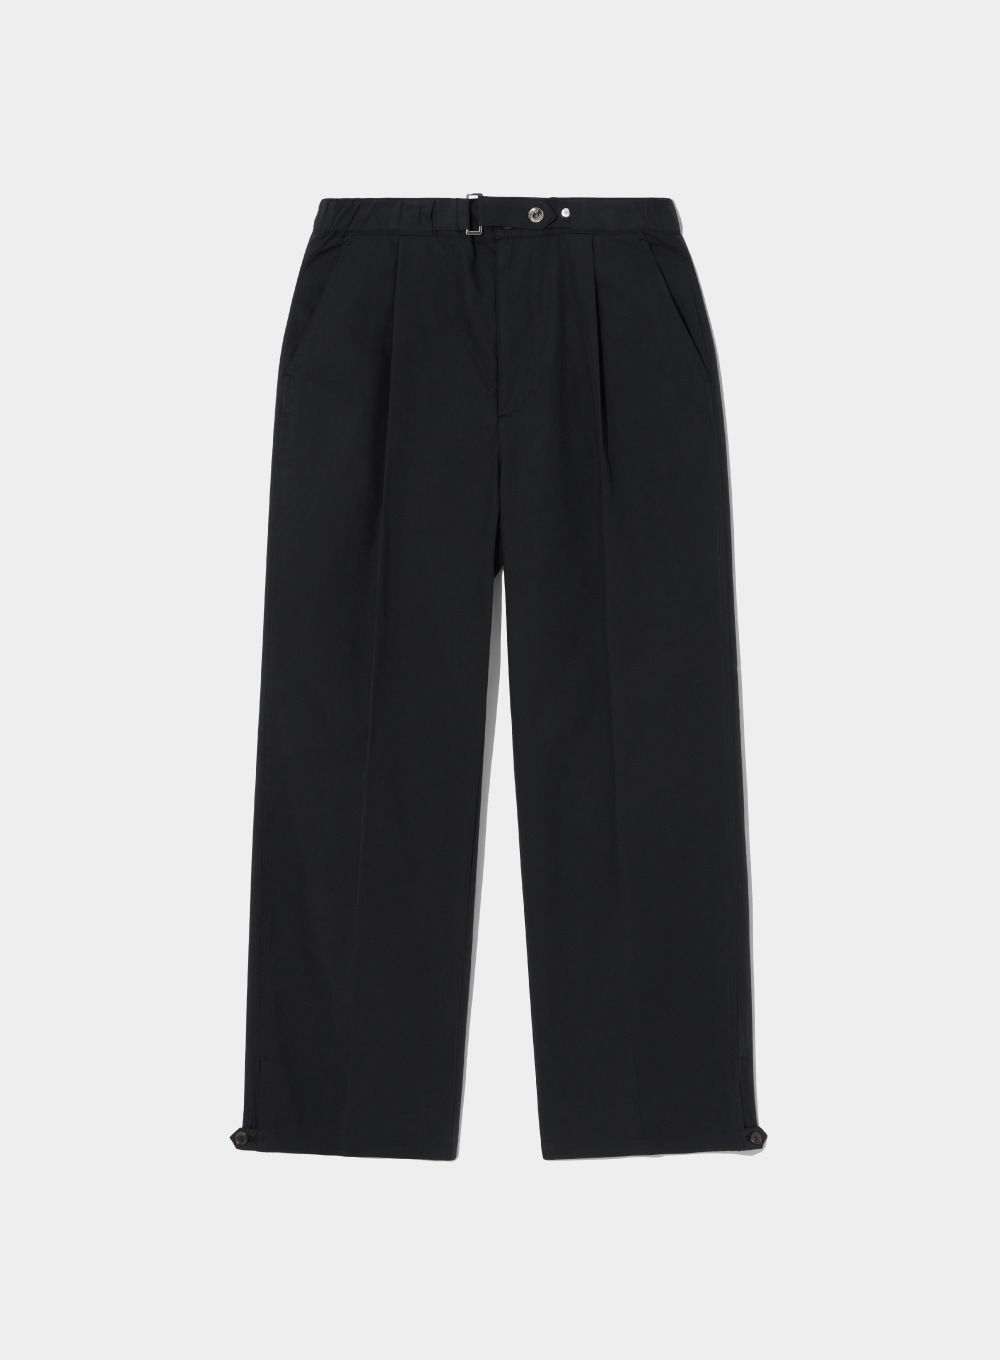 Hague Belted Banding Pants - Classic Black